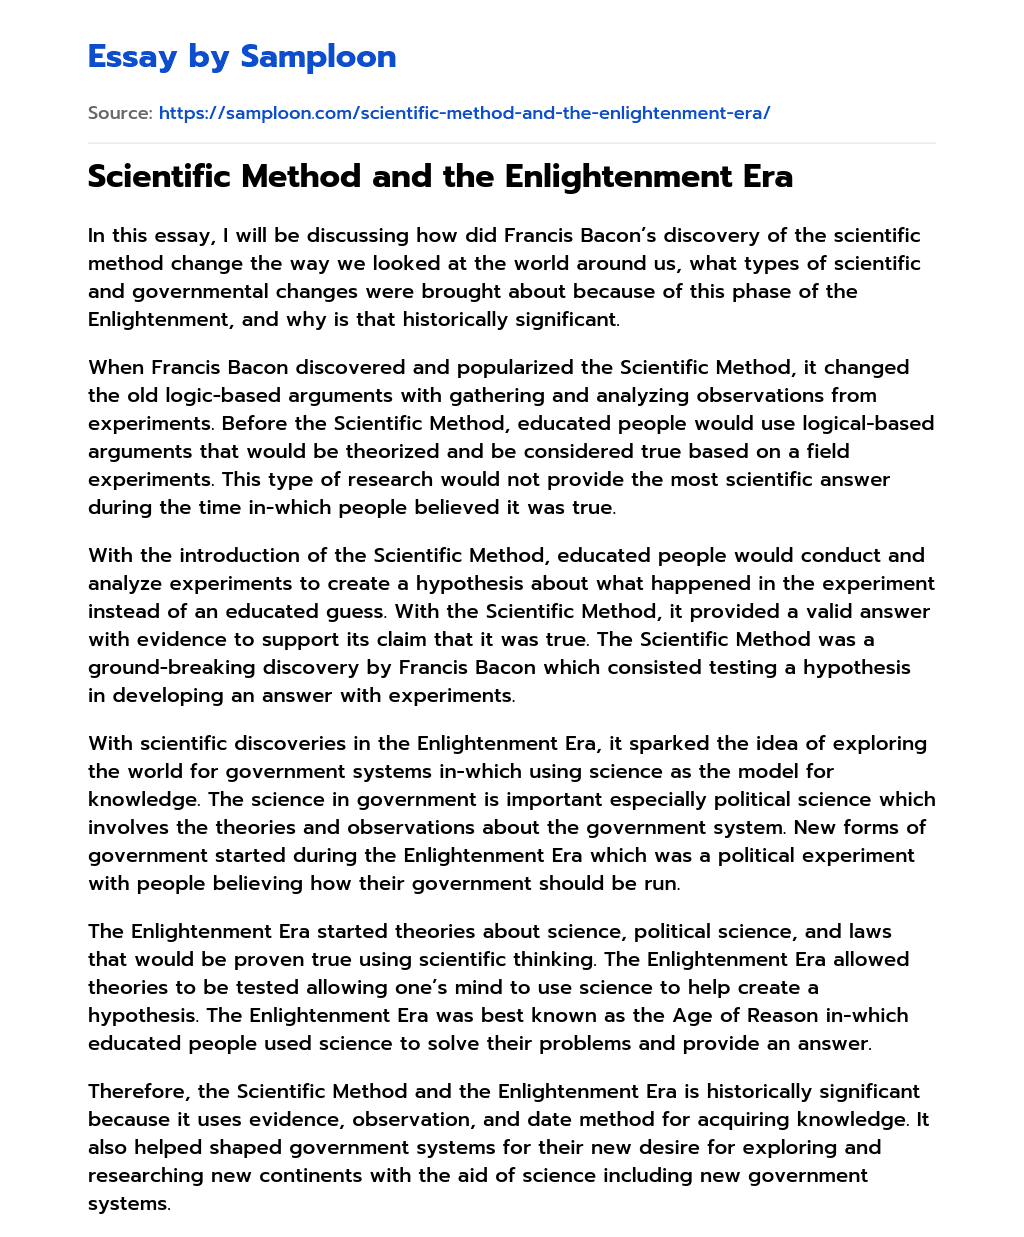 Scientific Method and the Enlightenment Era essay